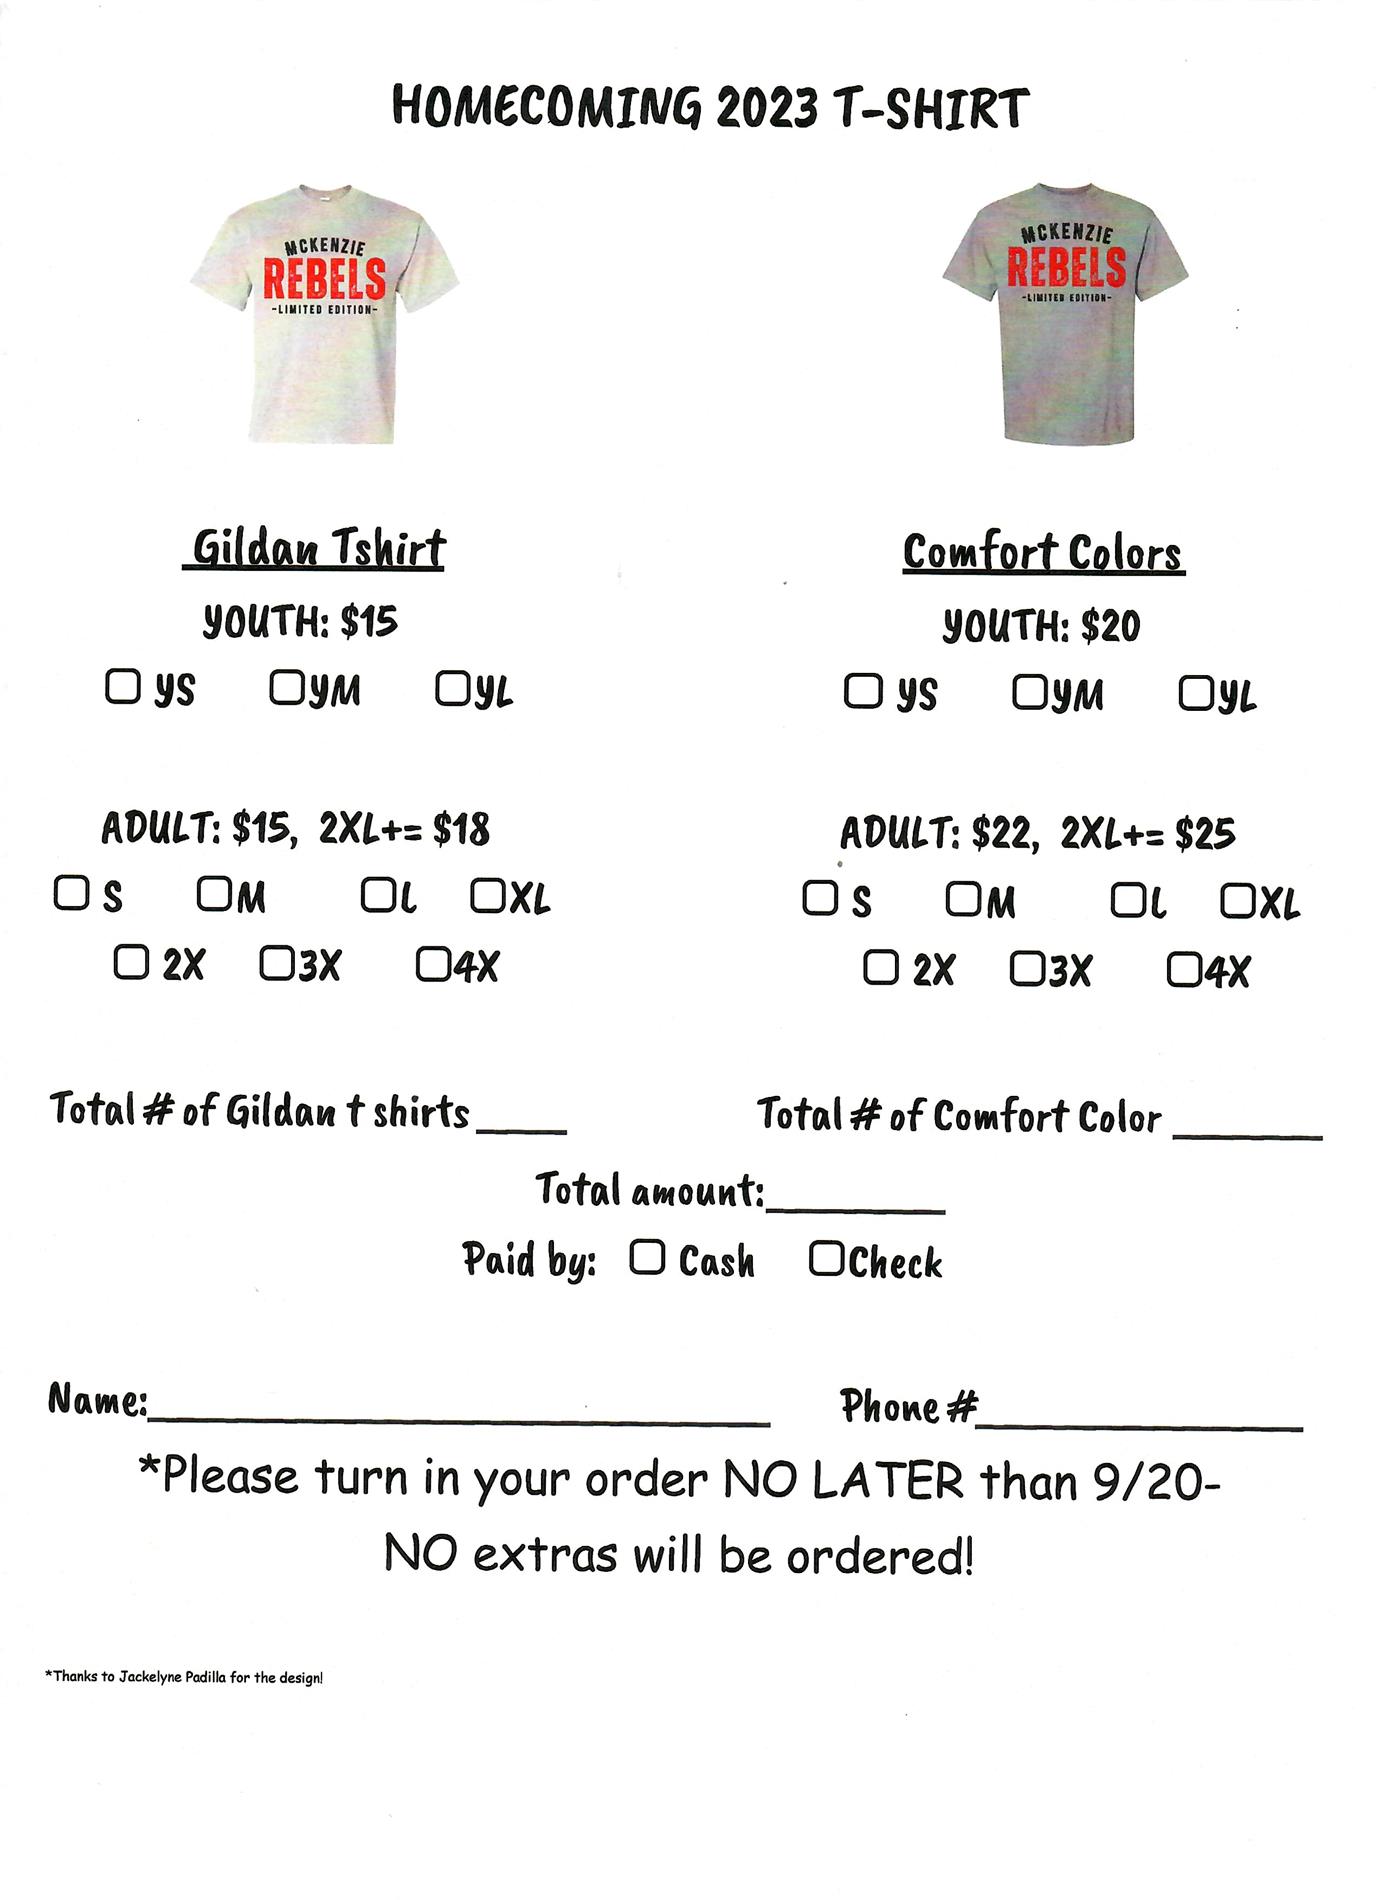 Homecoming 2023 T-shirt order form